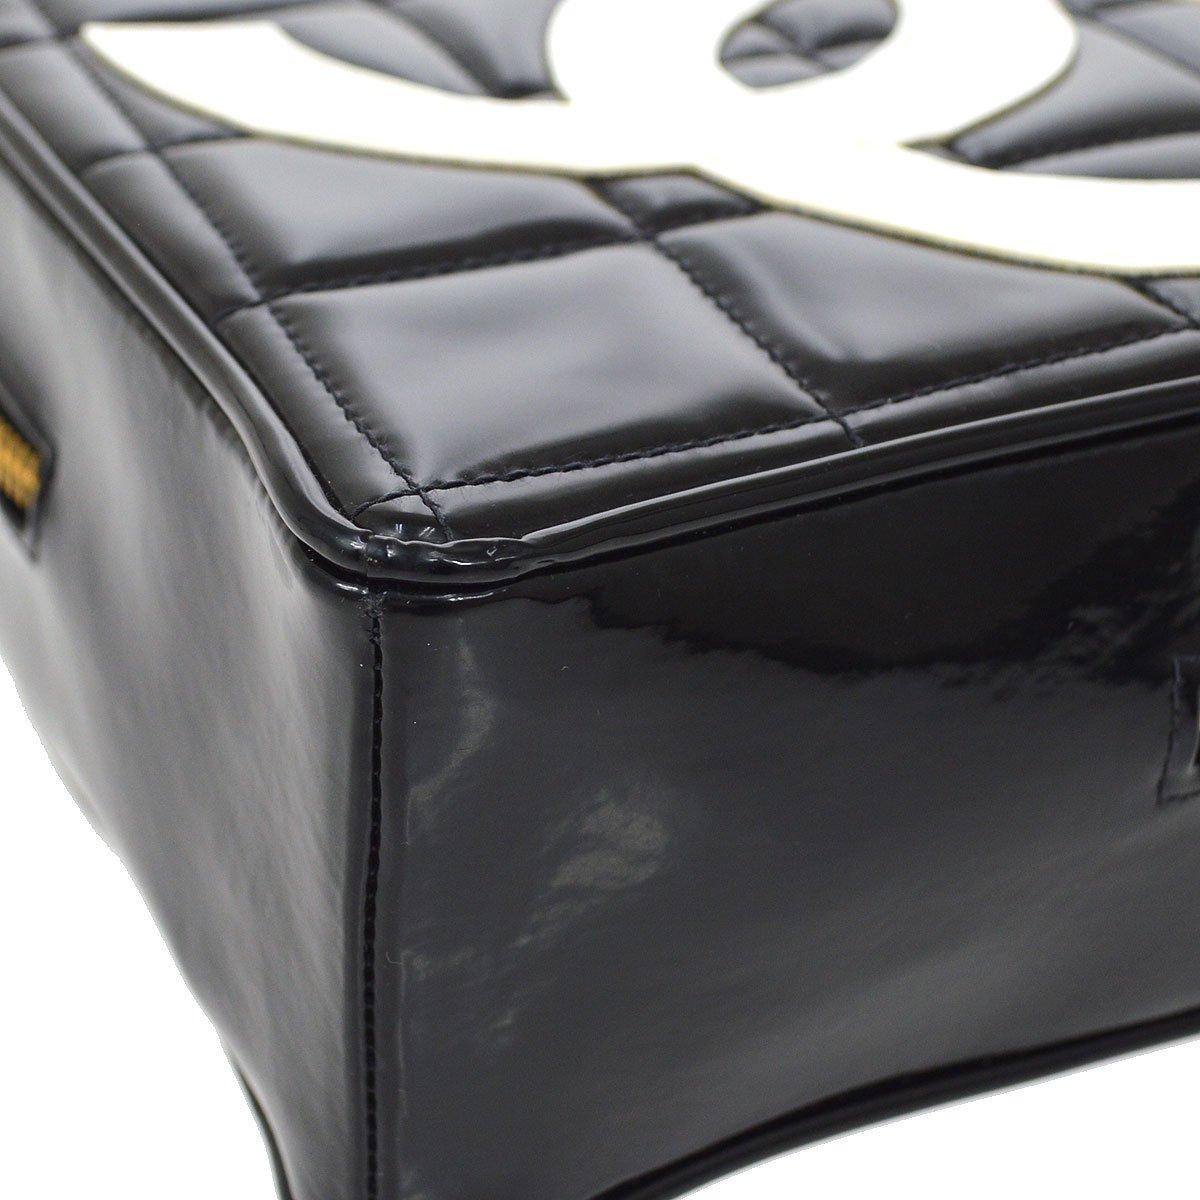 Women's CHANEL CC Black White Patent Leather Heart Vanity Top Handle Satchel Bag